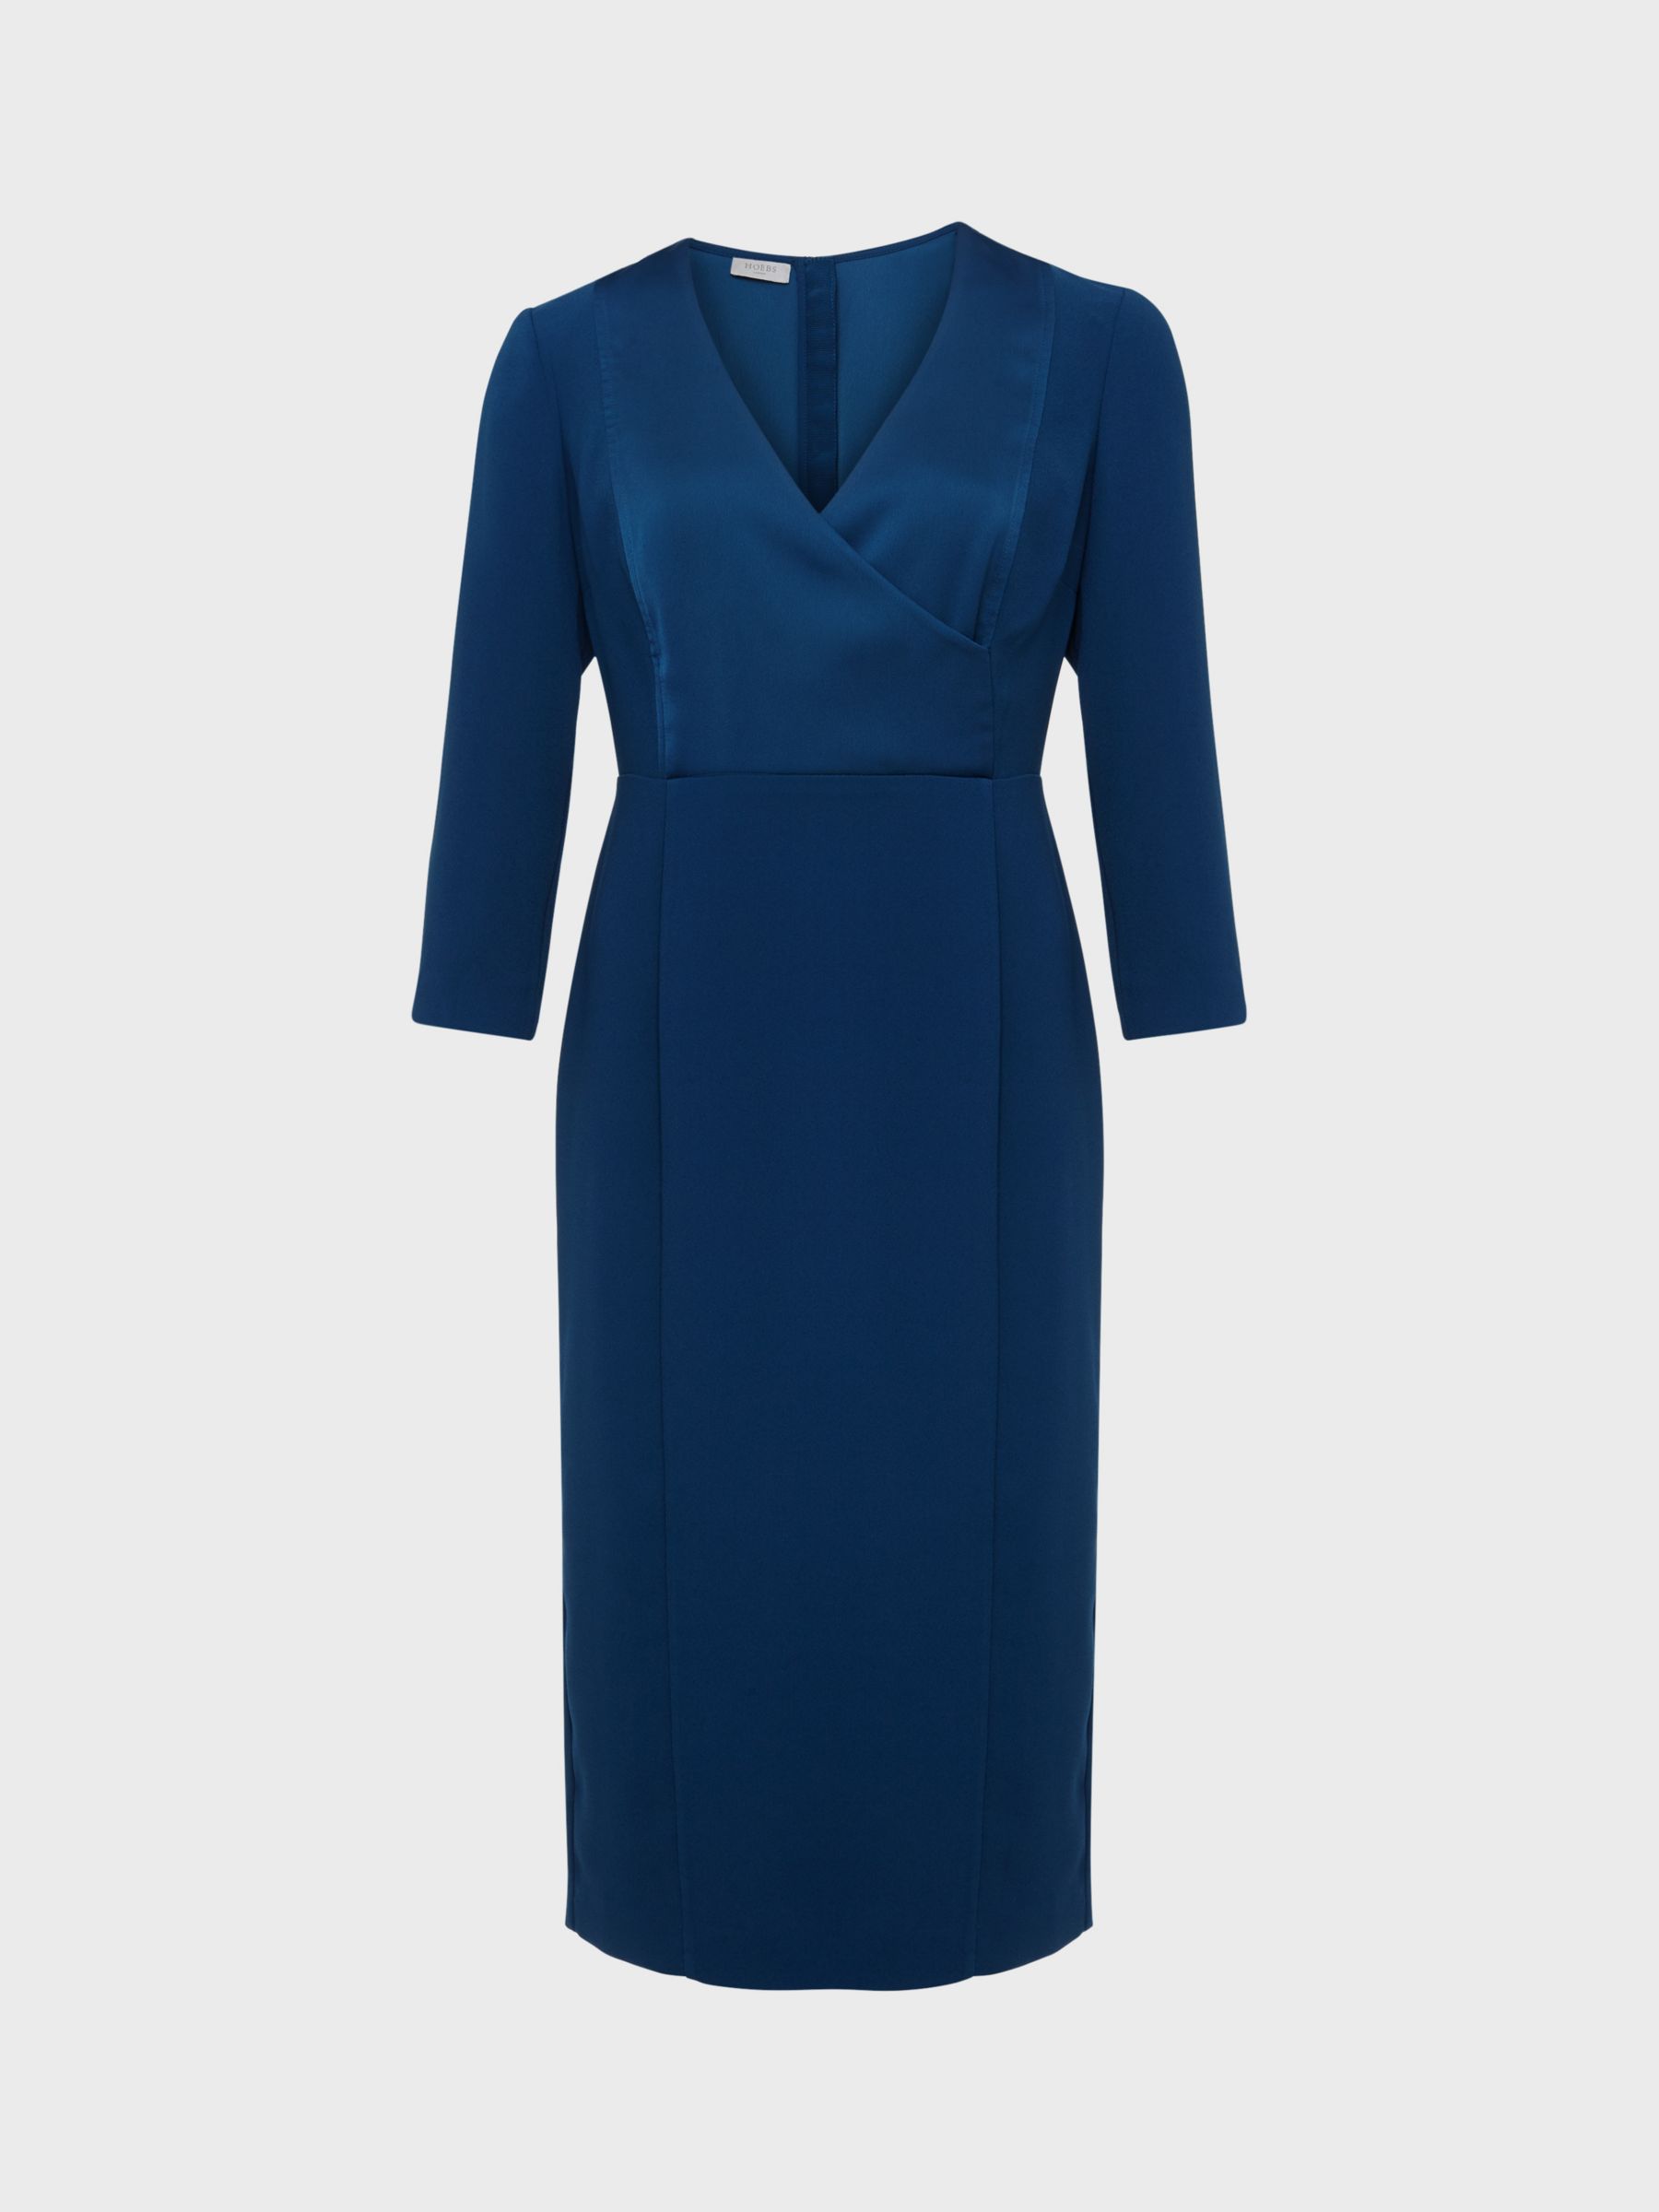 Hobbs Saige V Neck Sheath Dress, Steel Blue at John Lewis & Partners